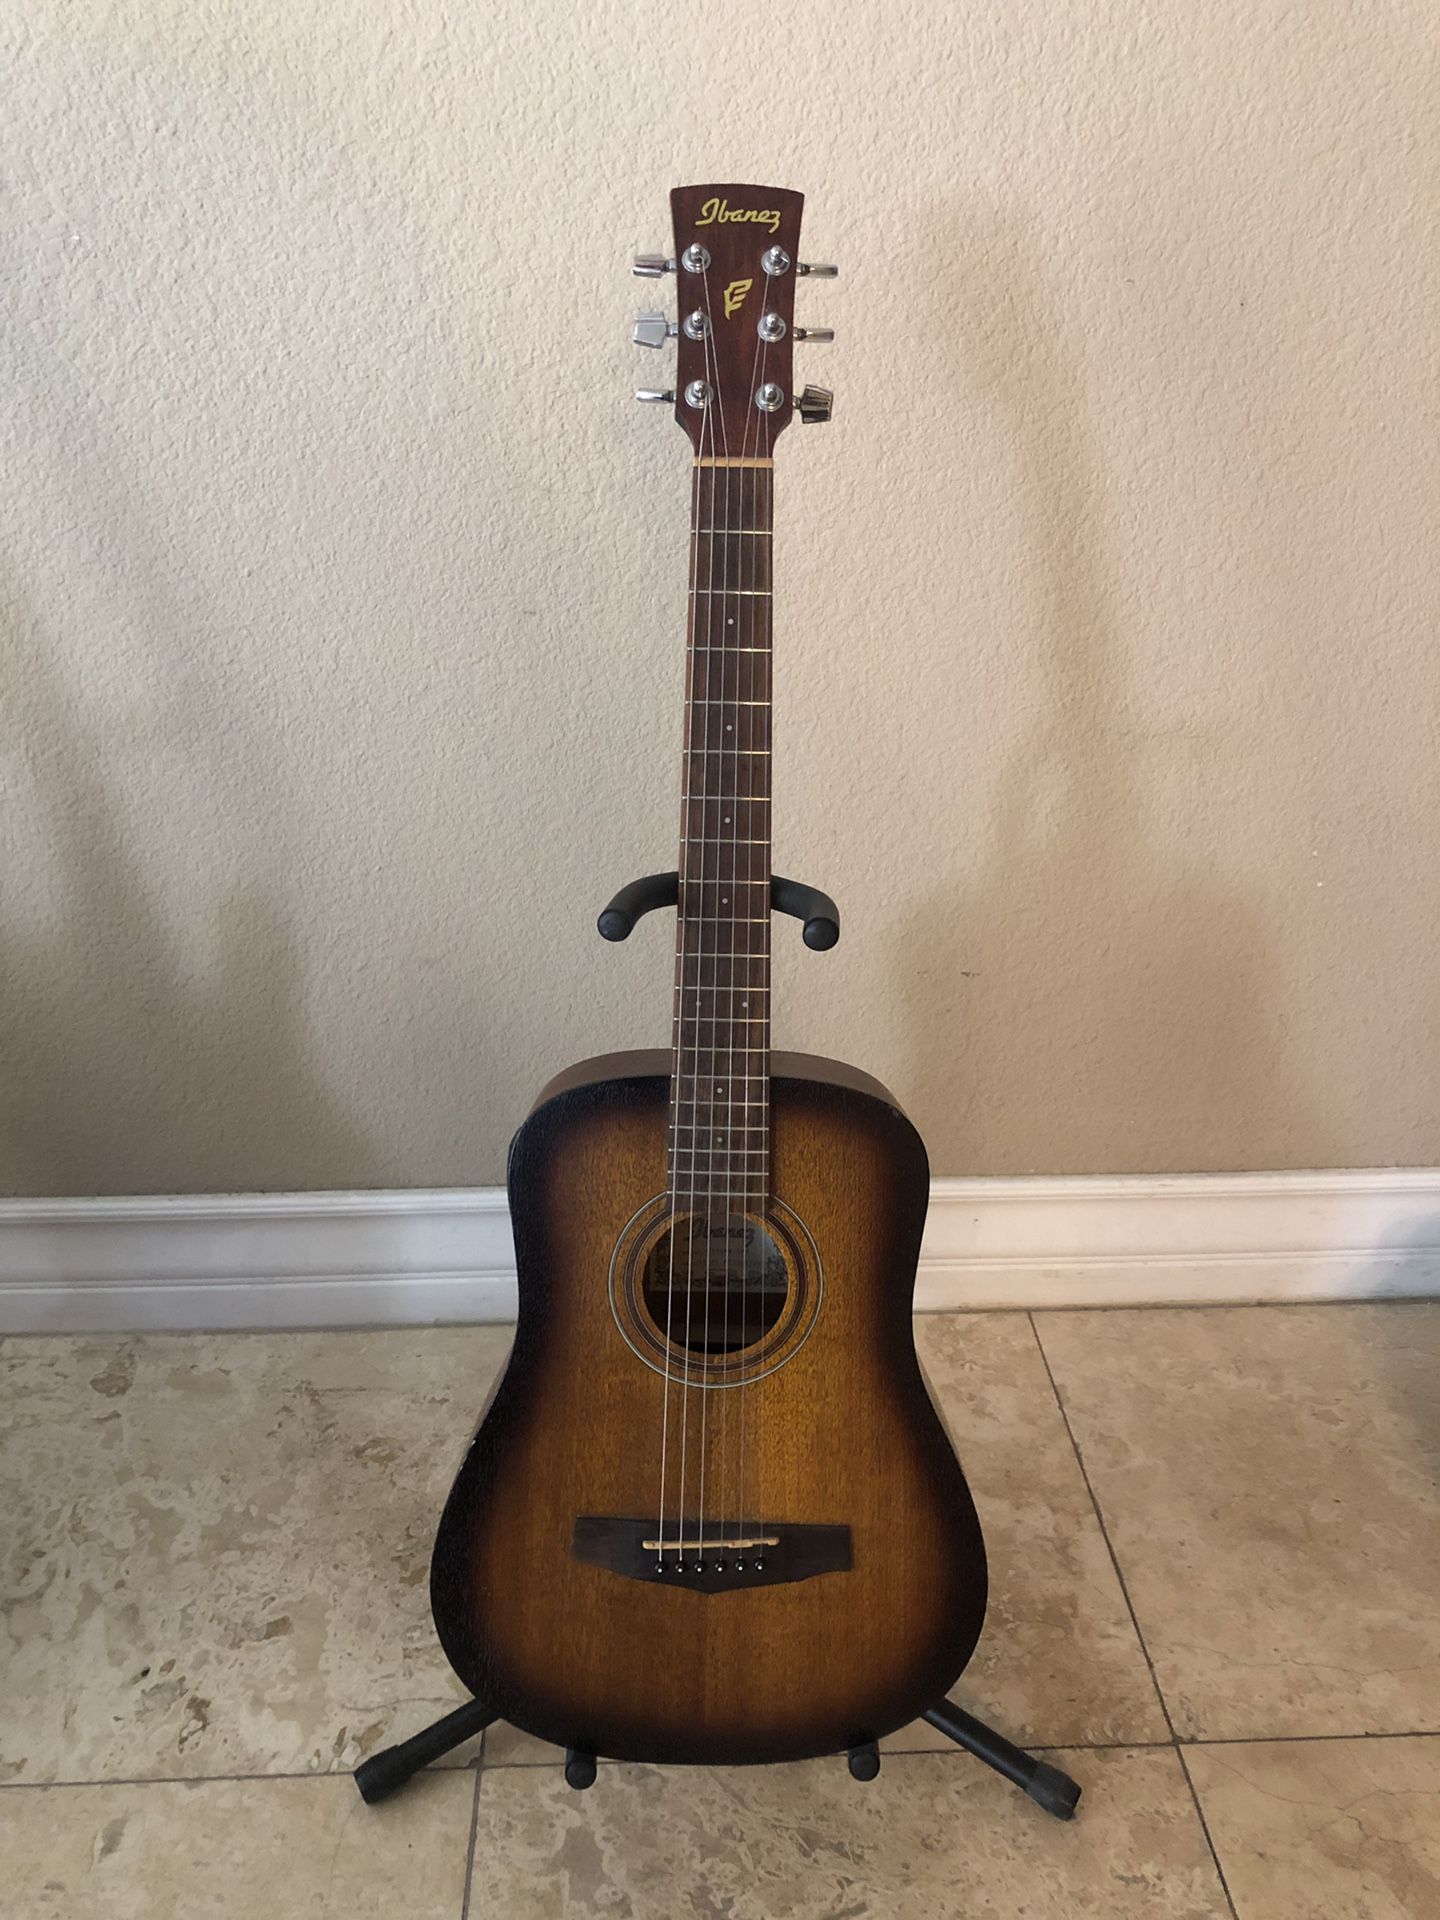 Ibanez acoustic guitar (3/4 size)